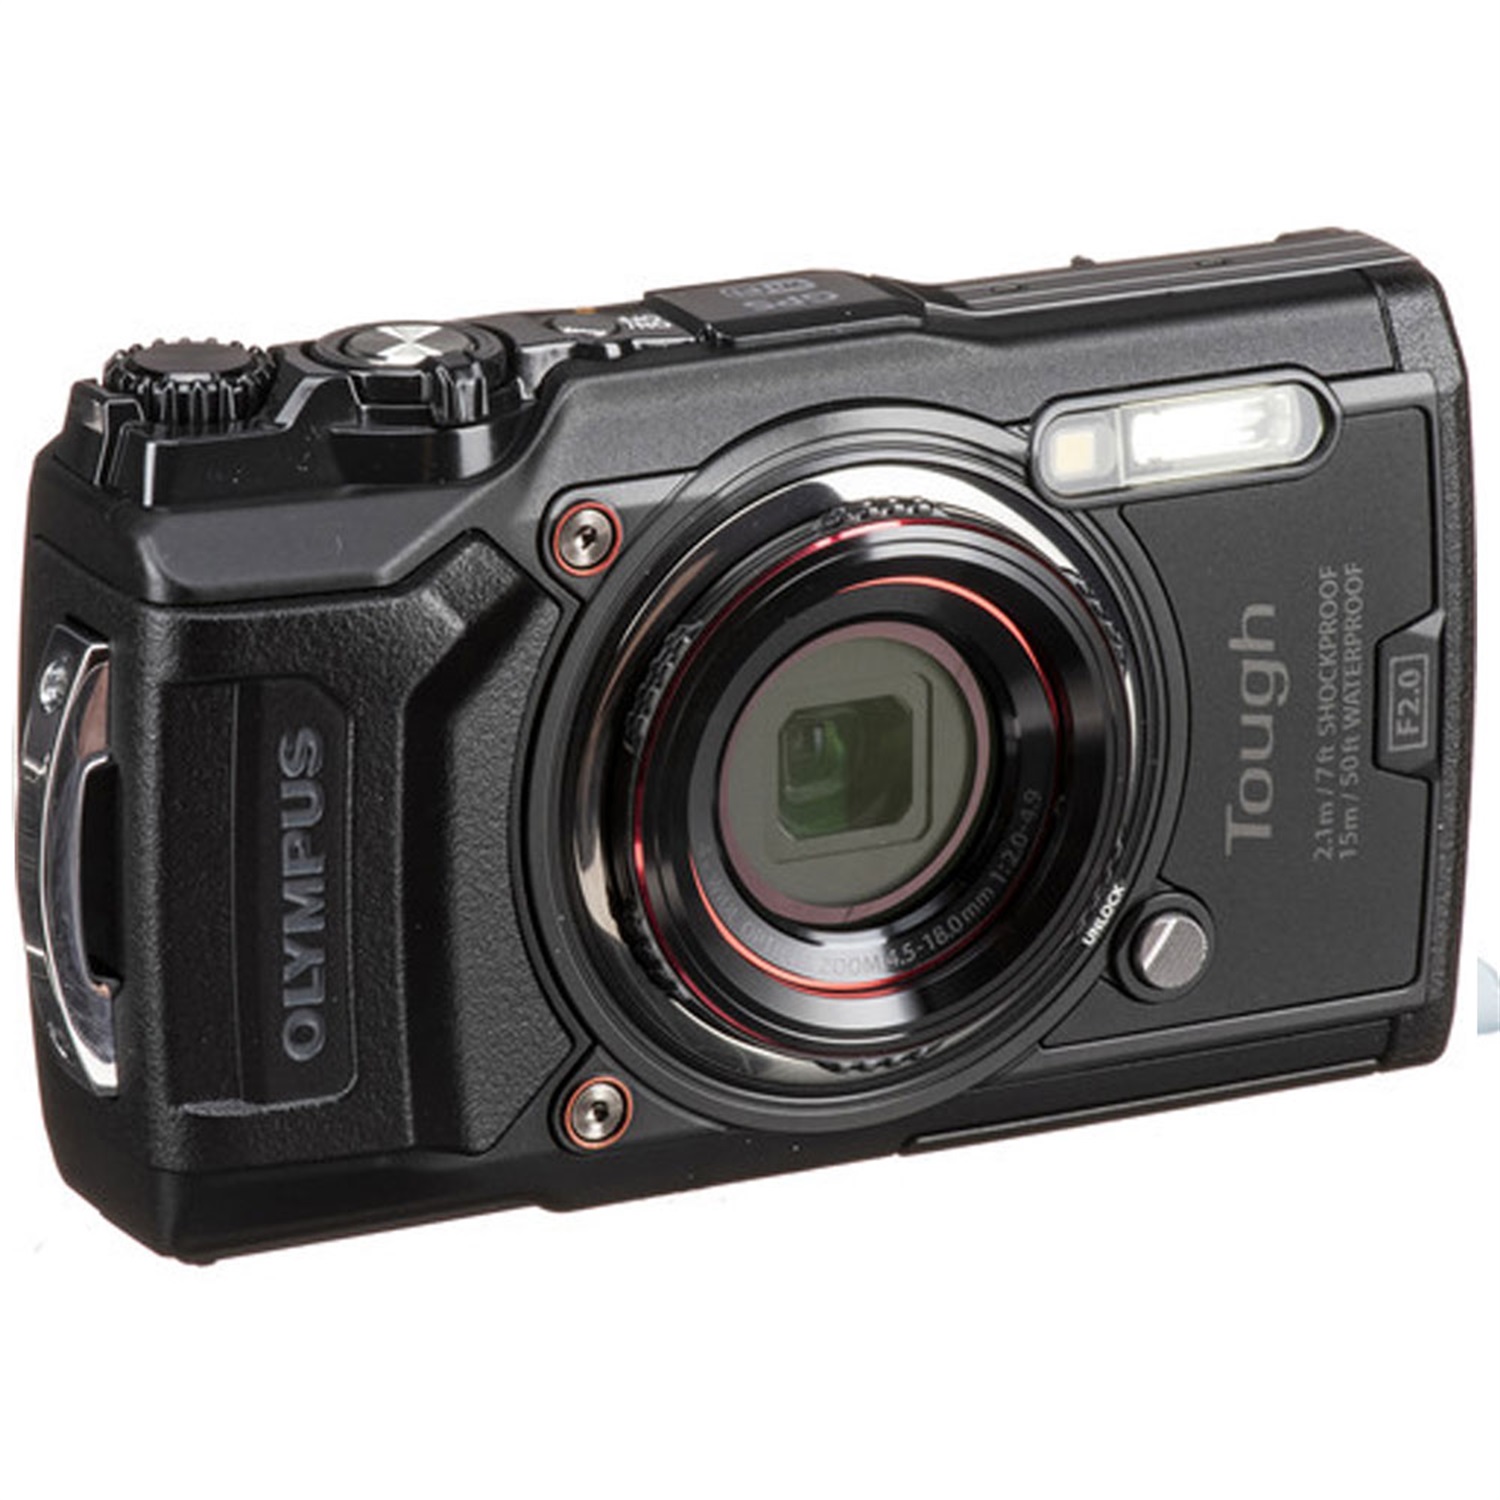 Olympus Tough TG-6 12MP Waterproof W-Fi Digital Camera (Black)